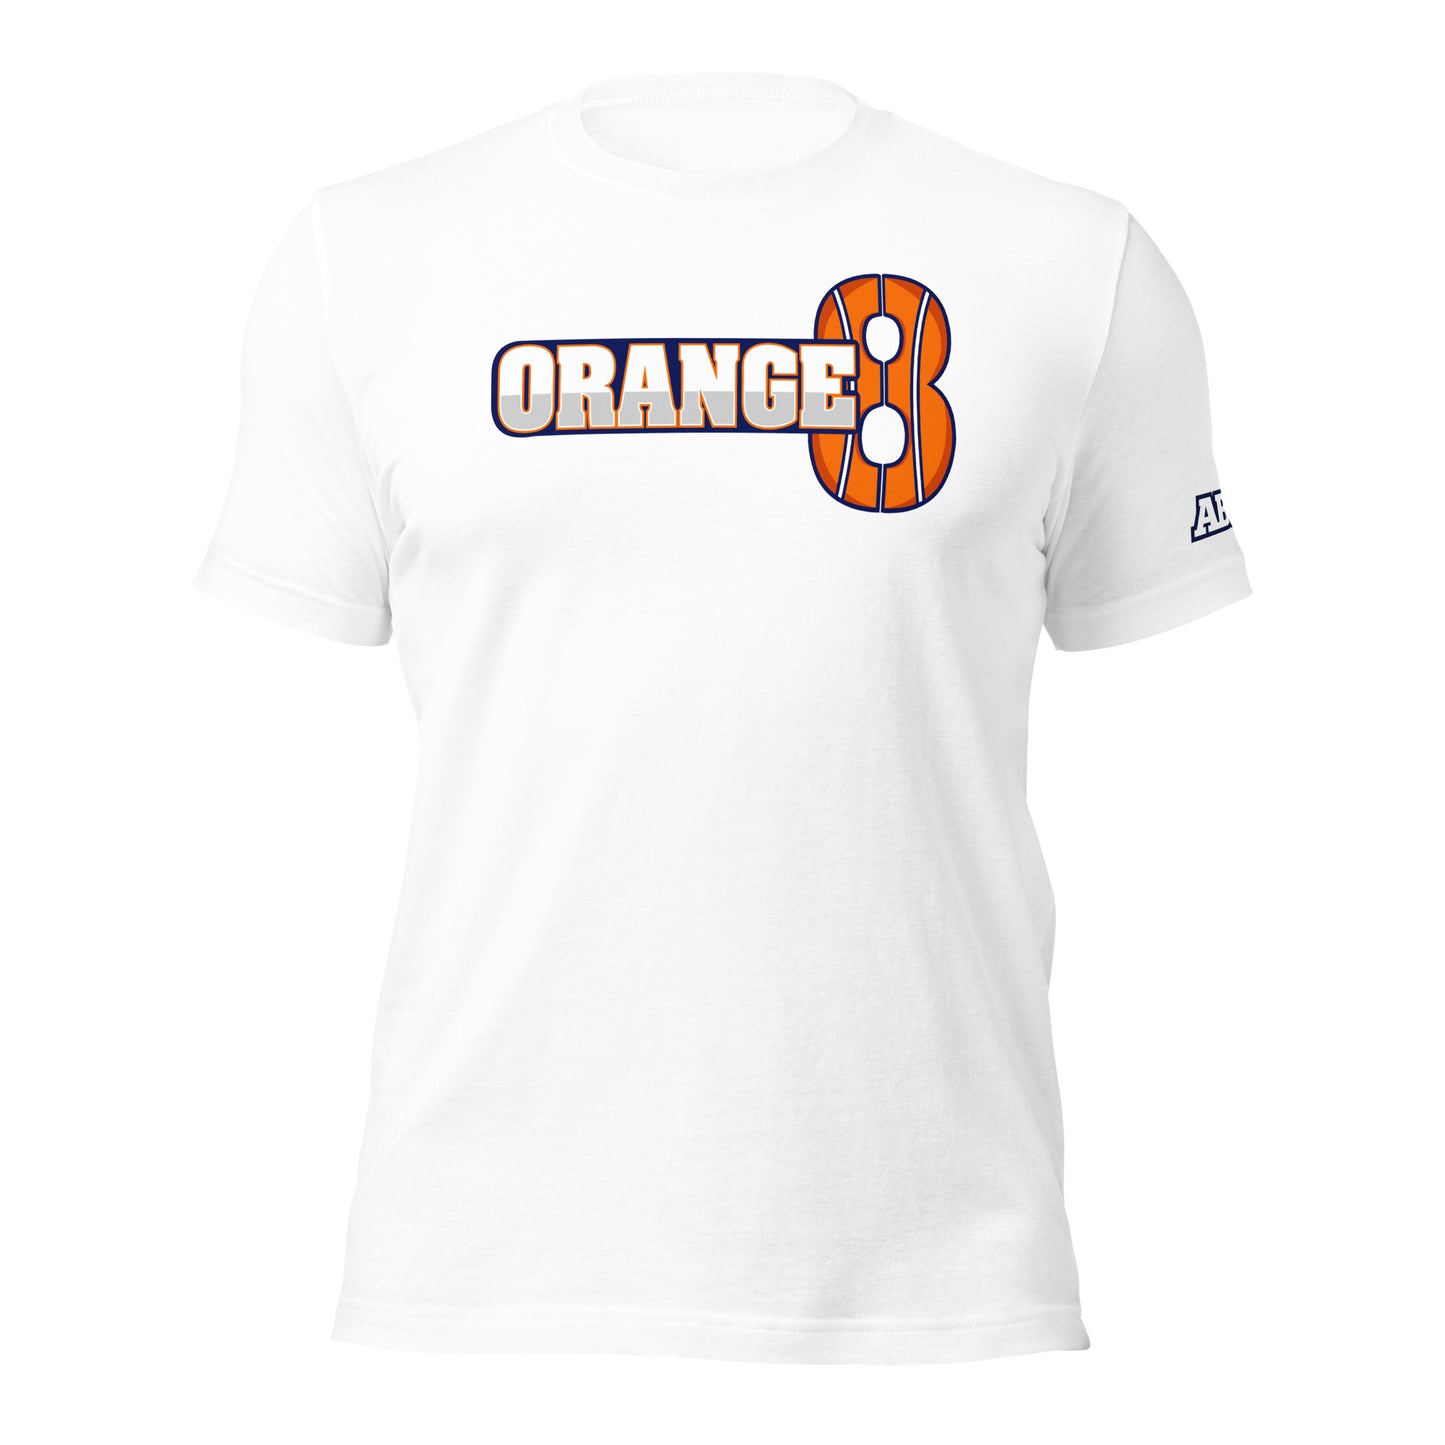 ORANGE 8 t-shirt